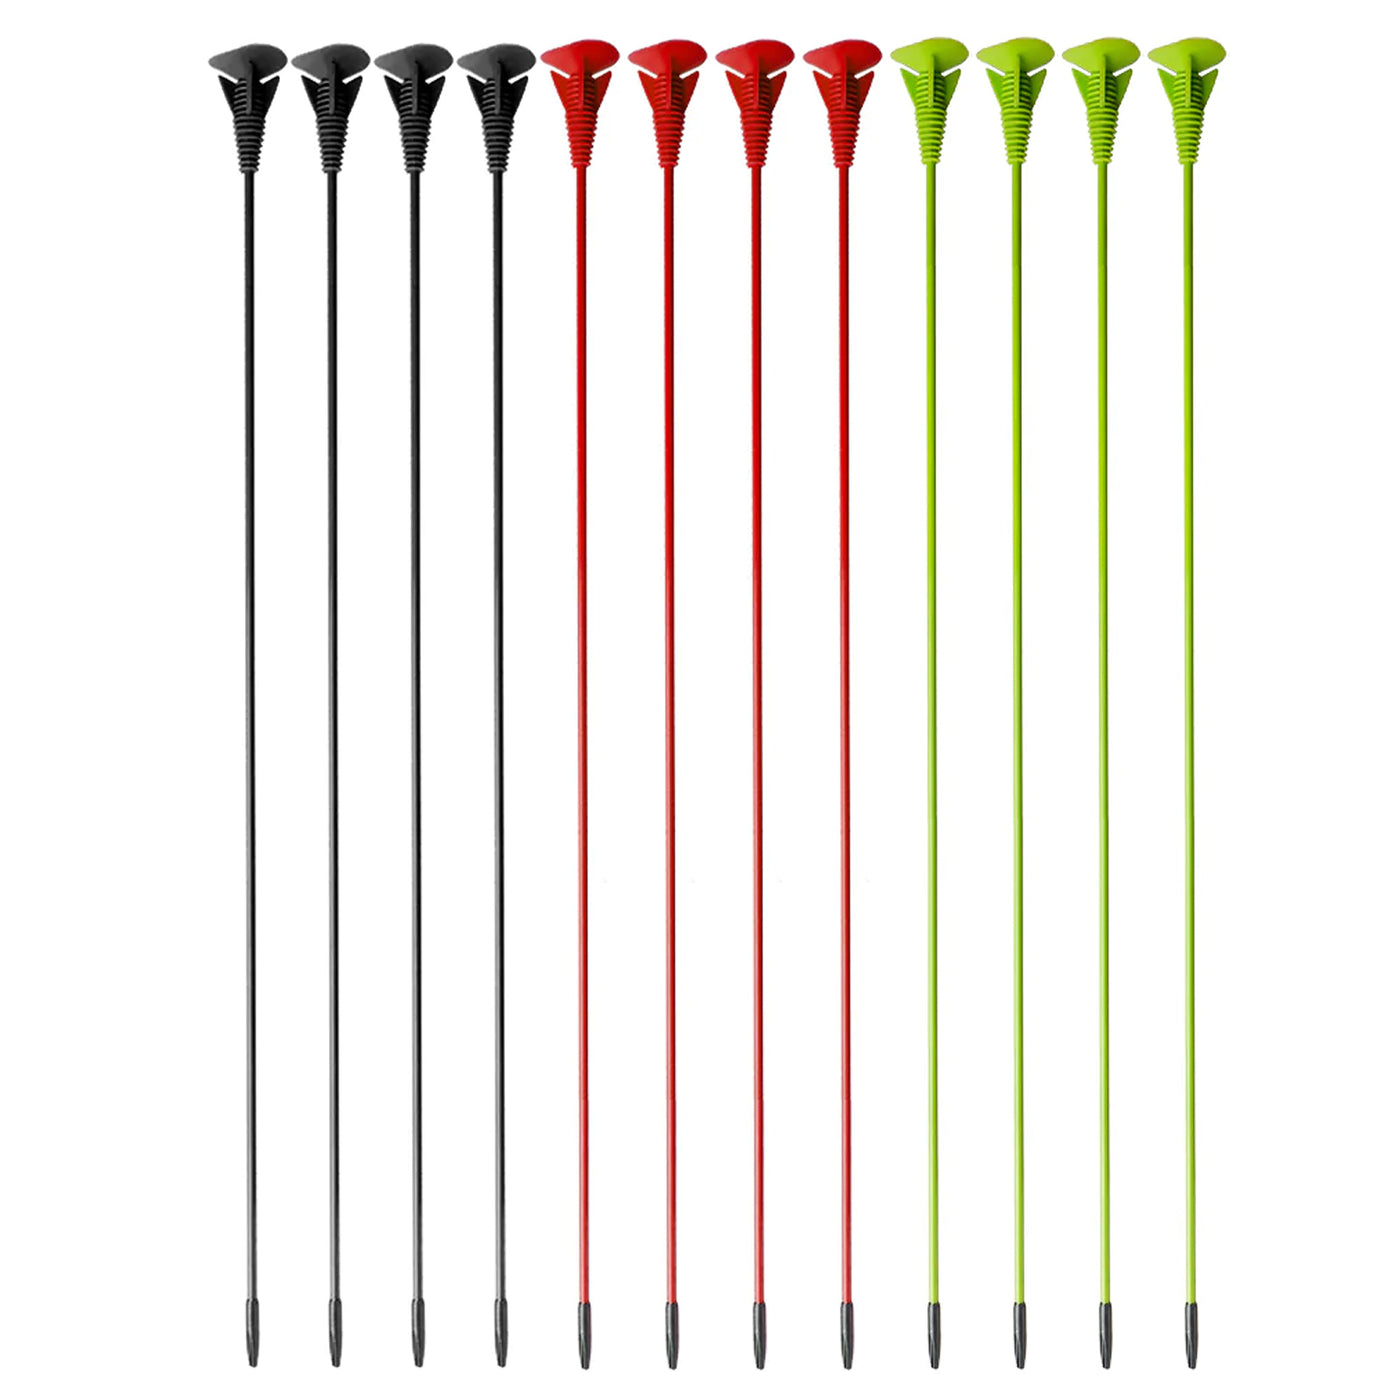 12x 25" Green/Black/Red Kids Fixed Sucker Arrowheads Fiberglass Game Archery Arrows Safe Toy